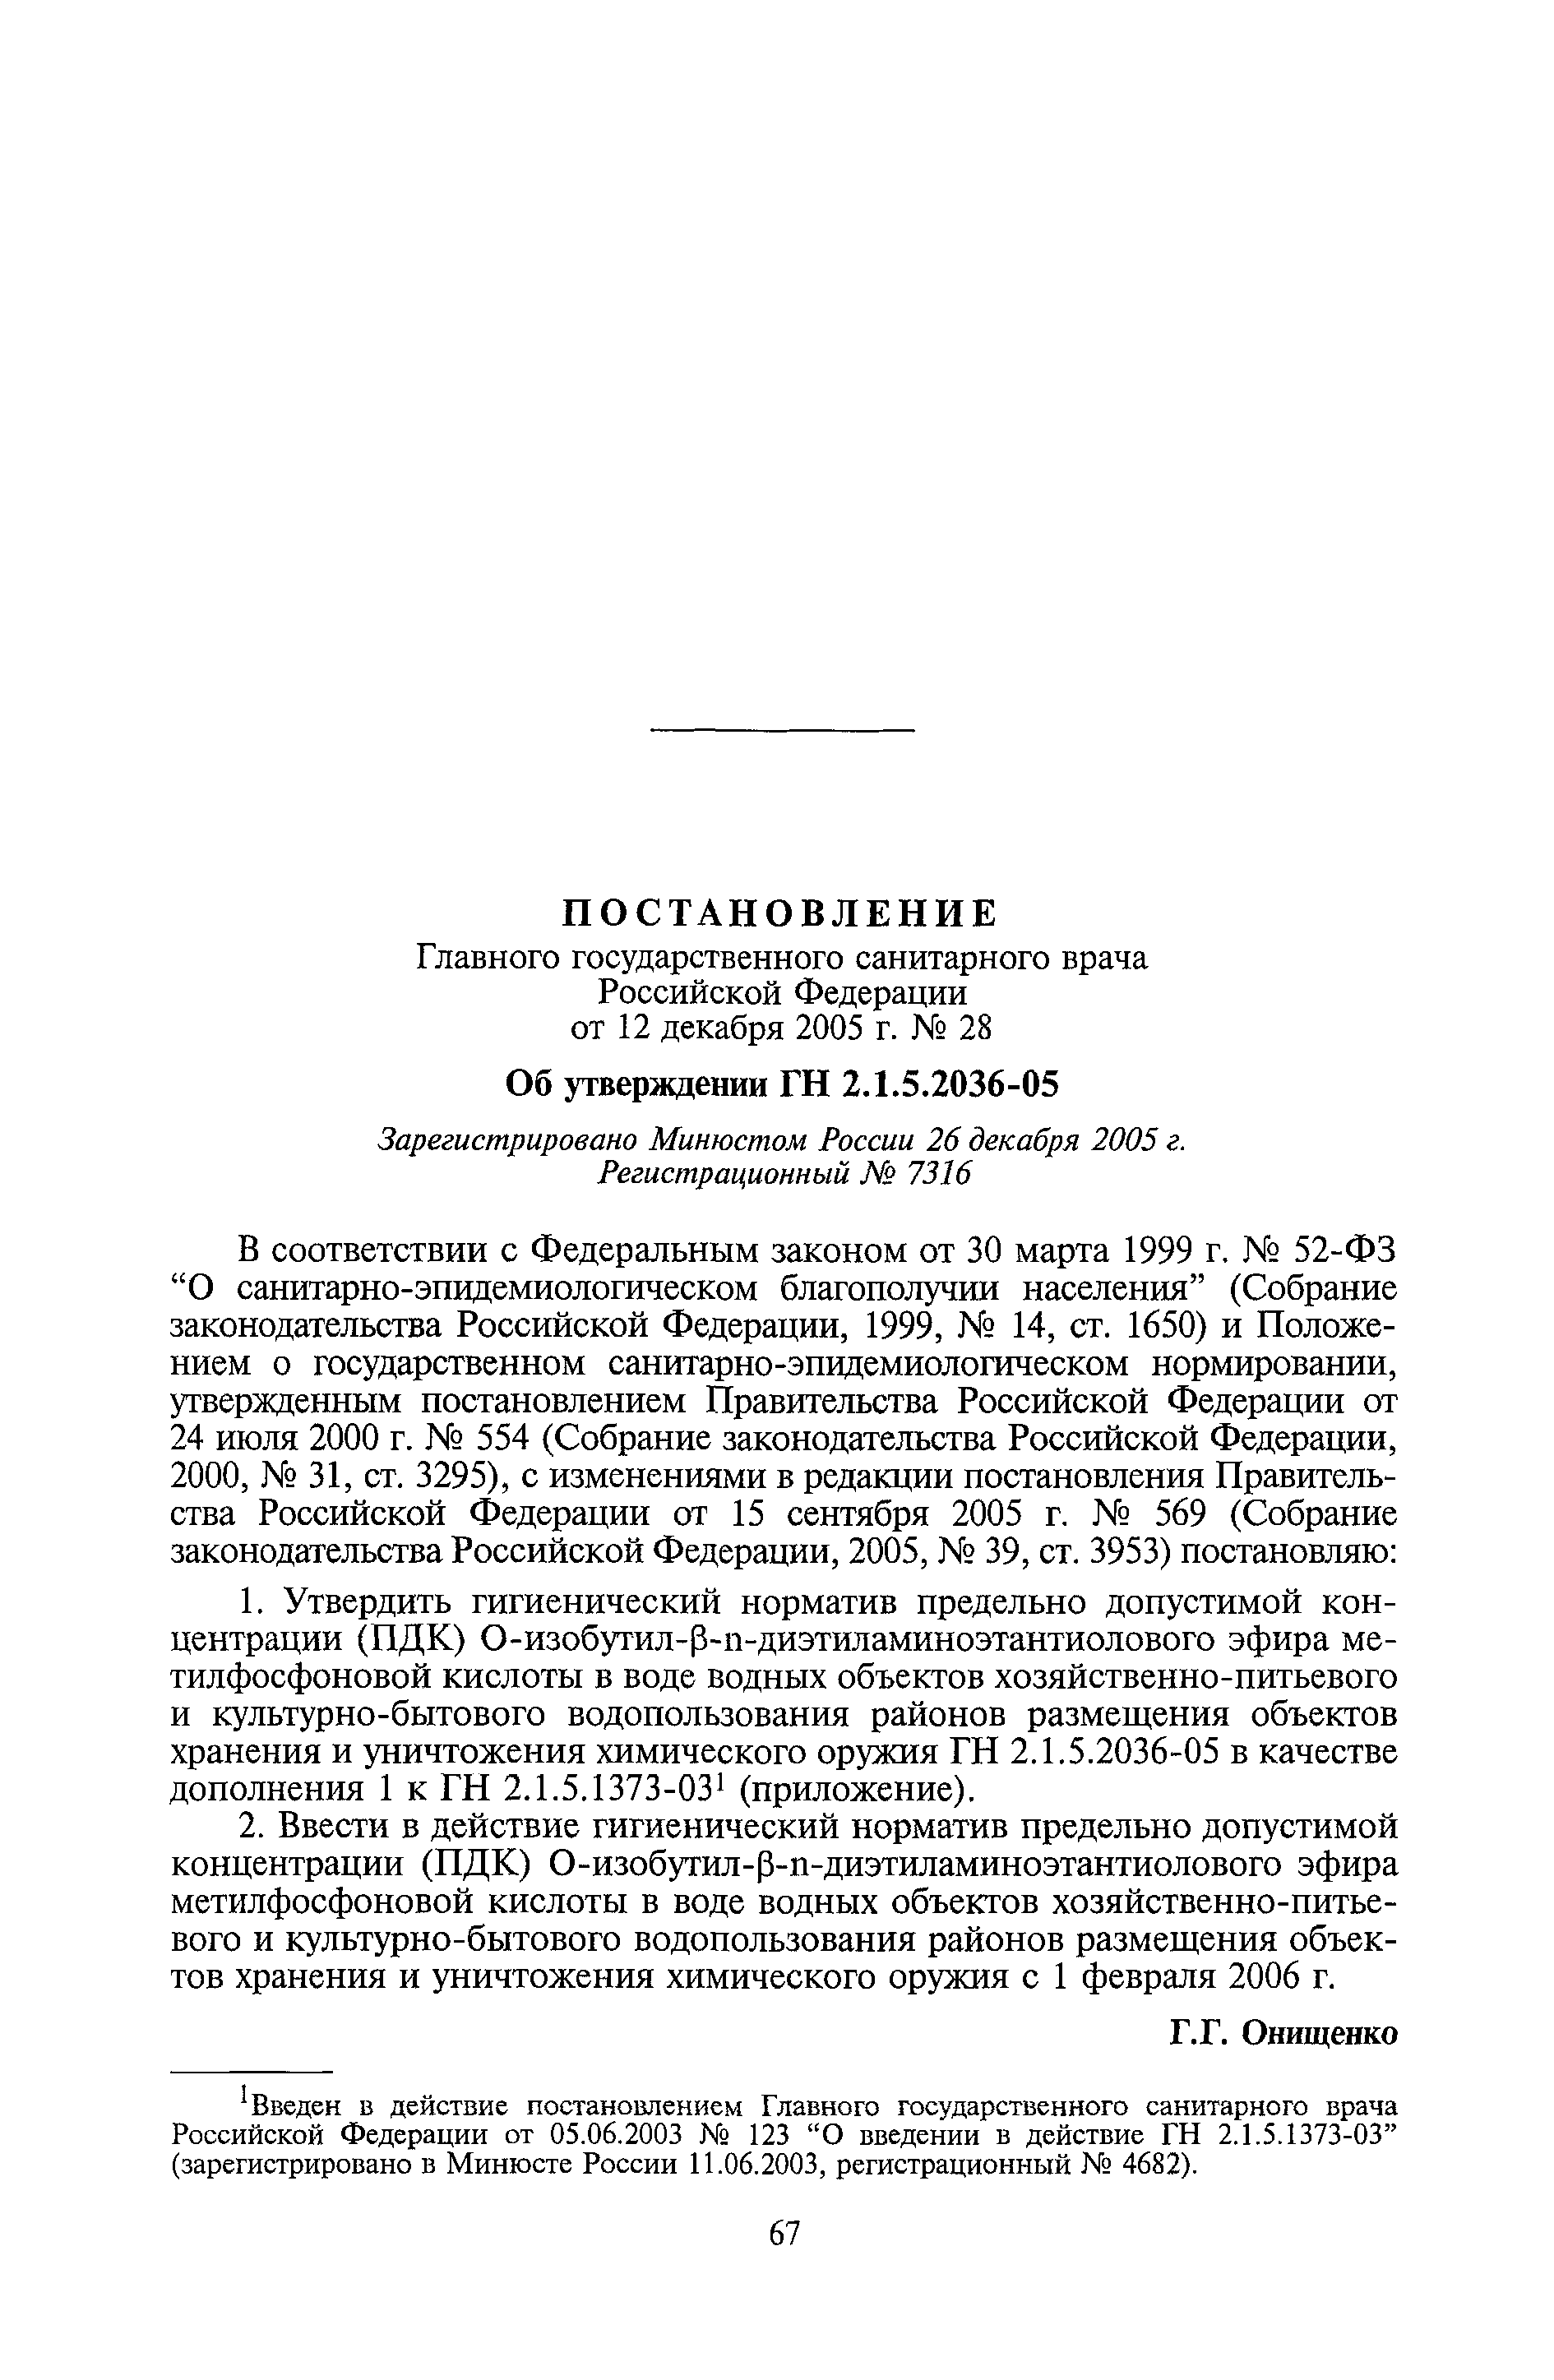 Дополнение № 1 (ГН 2.1.5.2036-05)